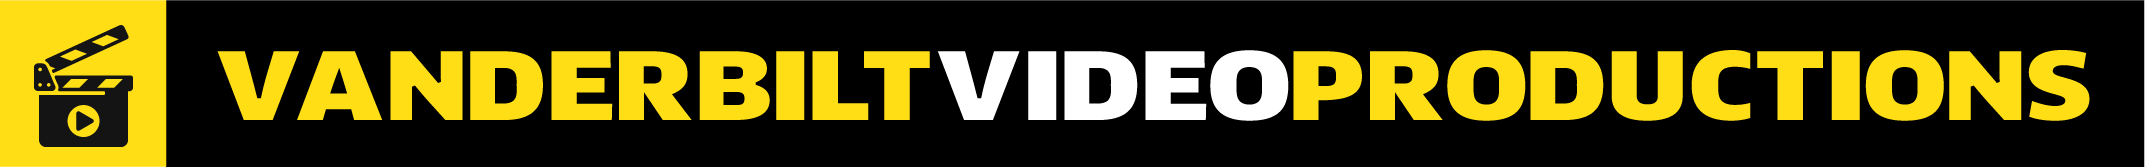 Vanderbilt Video Productions